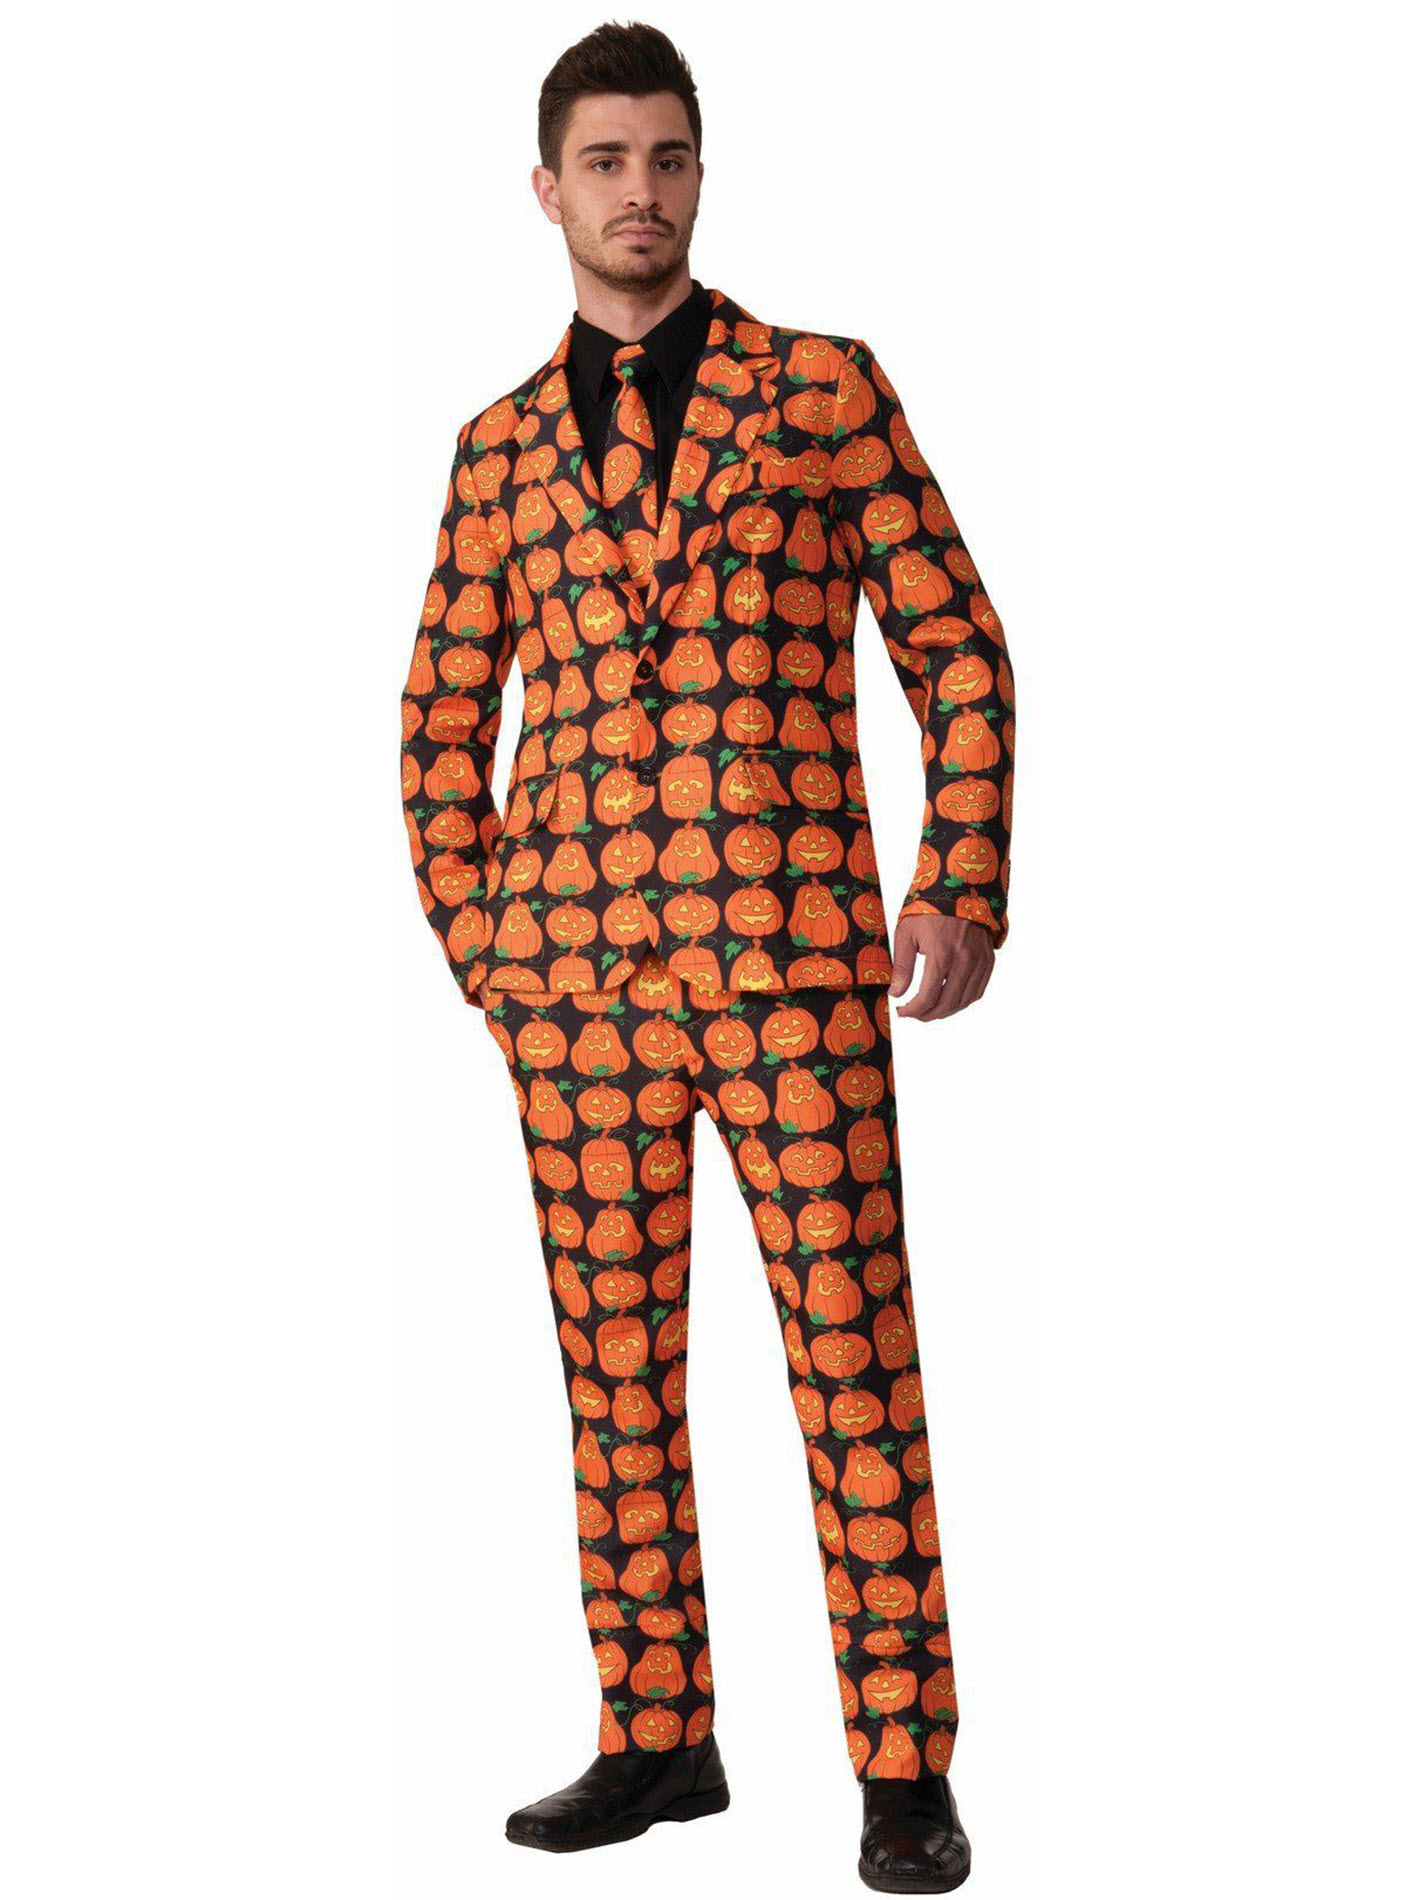 Forum Adult Pumpkin Suit Costume - Large